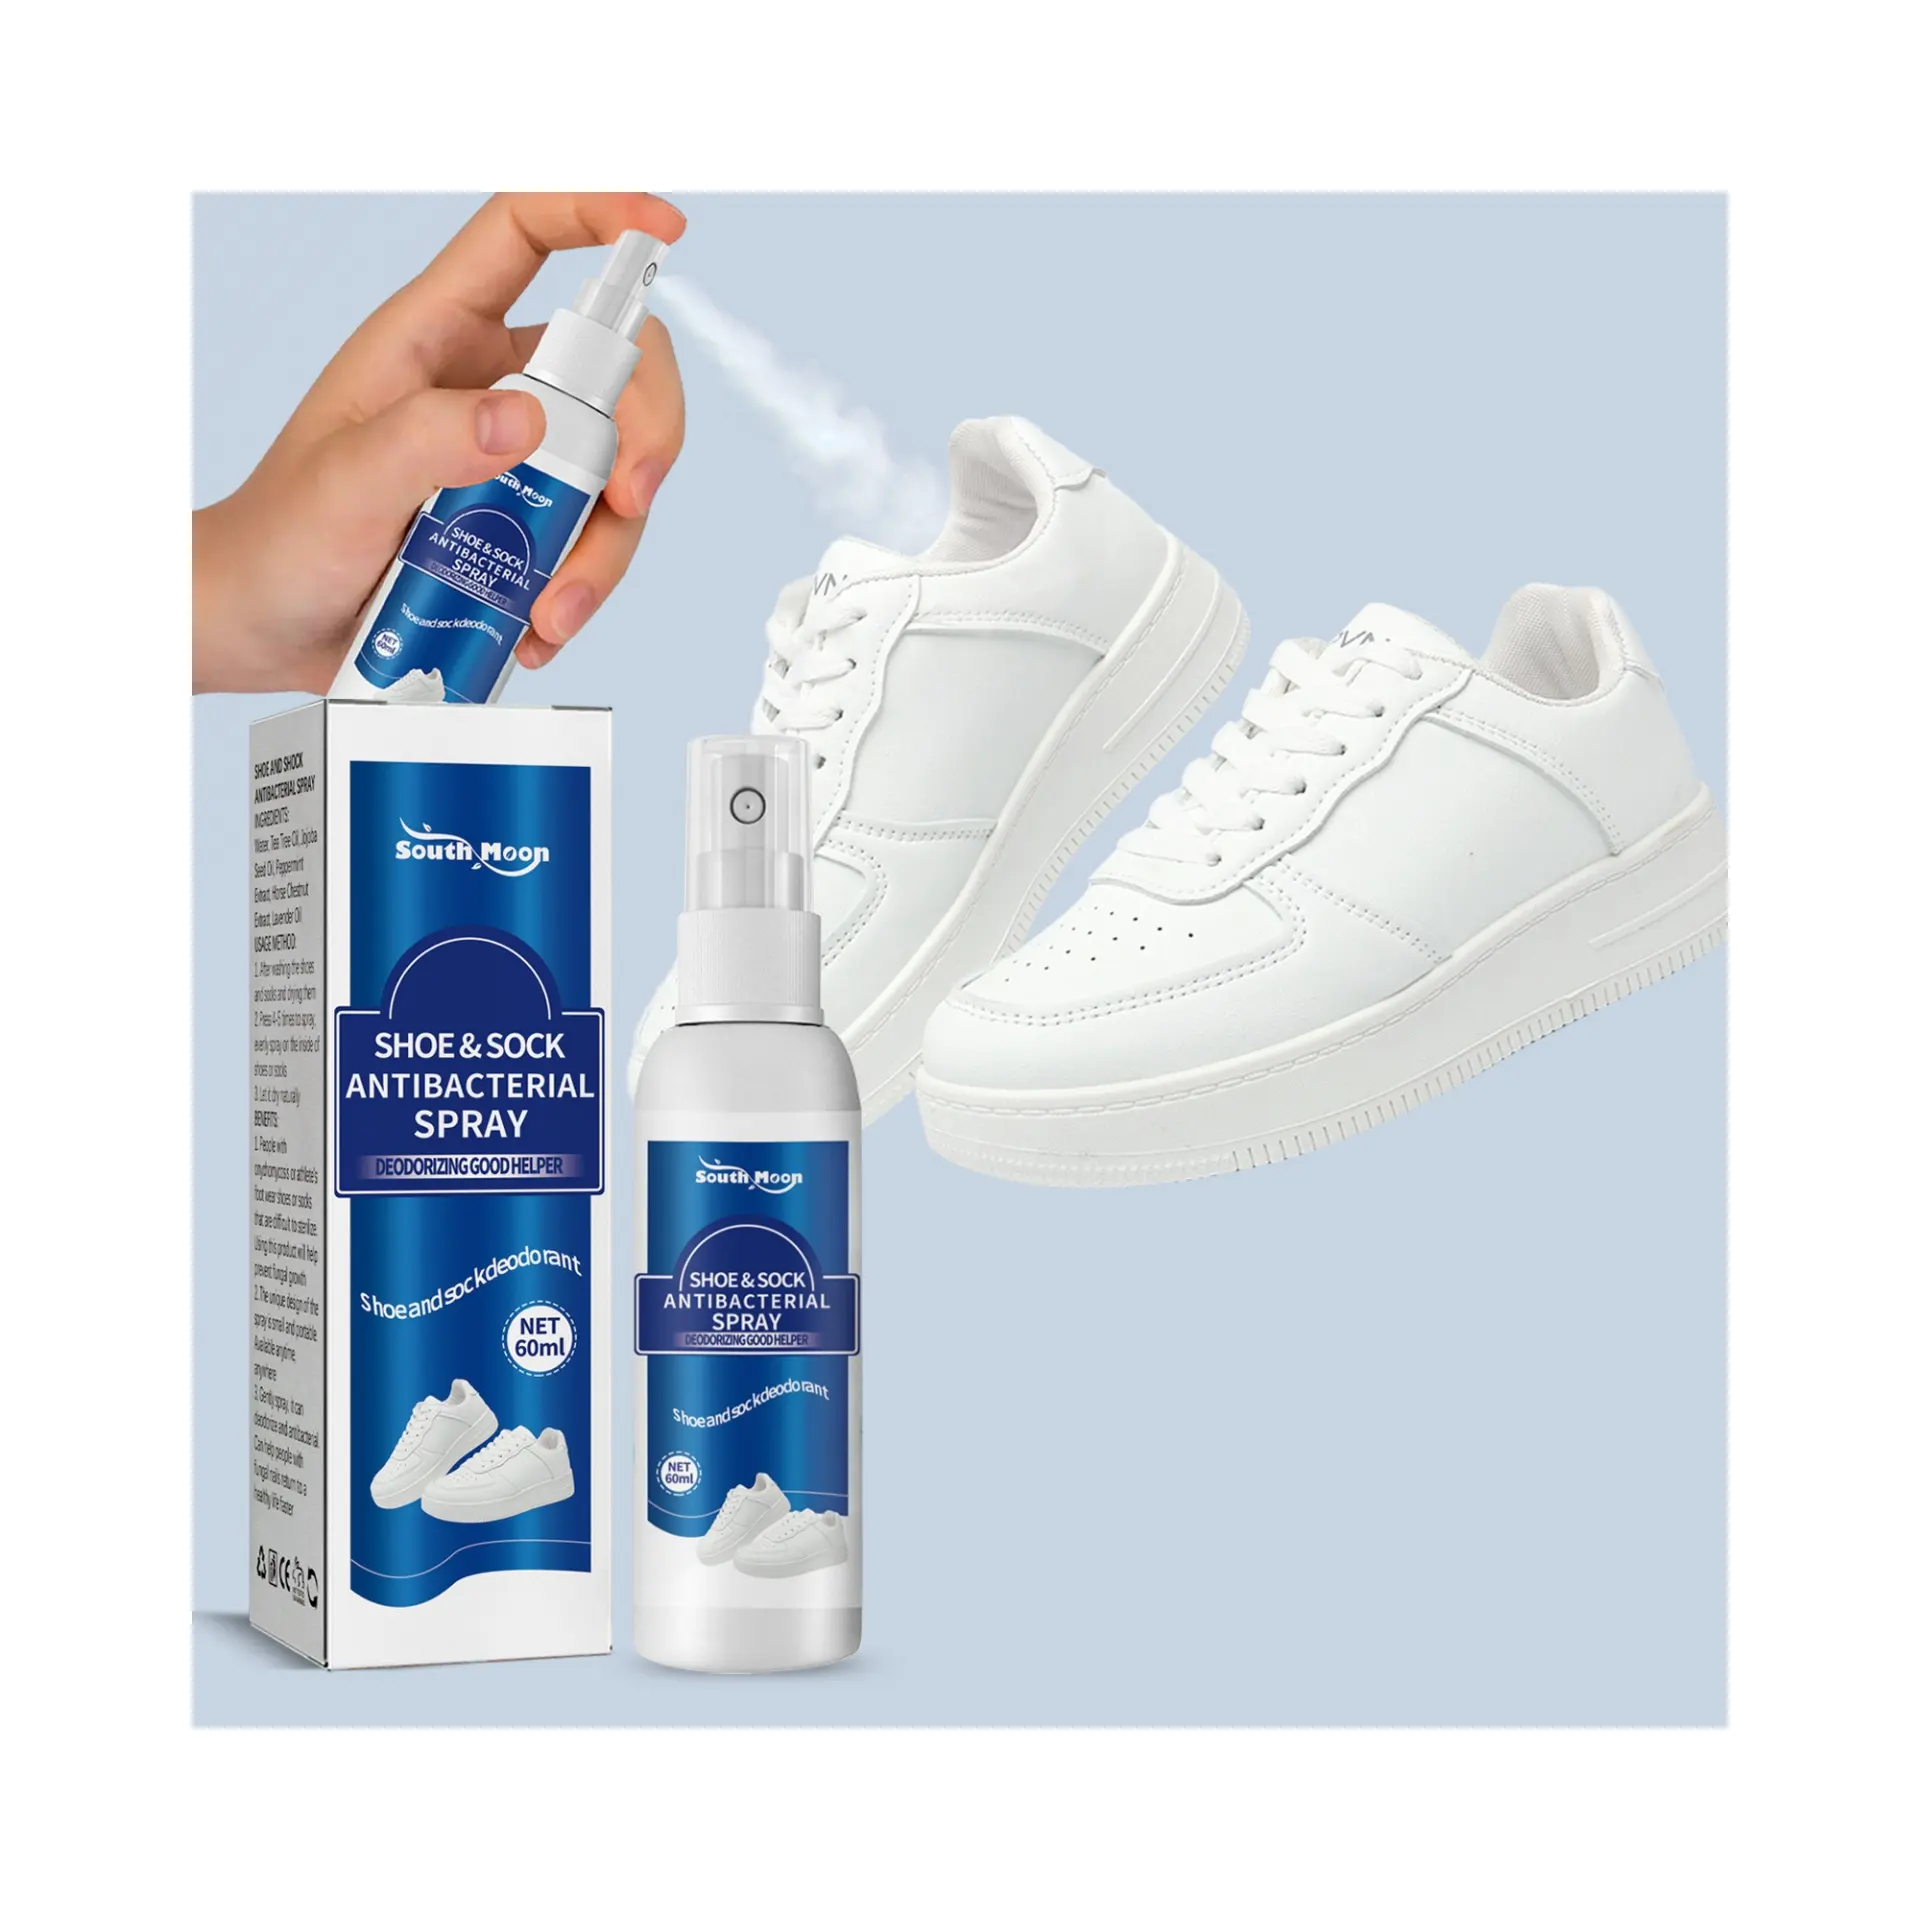 factory Antibacterial Rate odor eliminator deodorizer Quickly deodorize dry Shoe deodorant spray 60ml oem odm for Shoes Socks